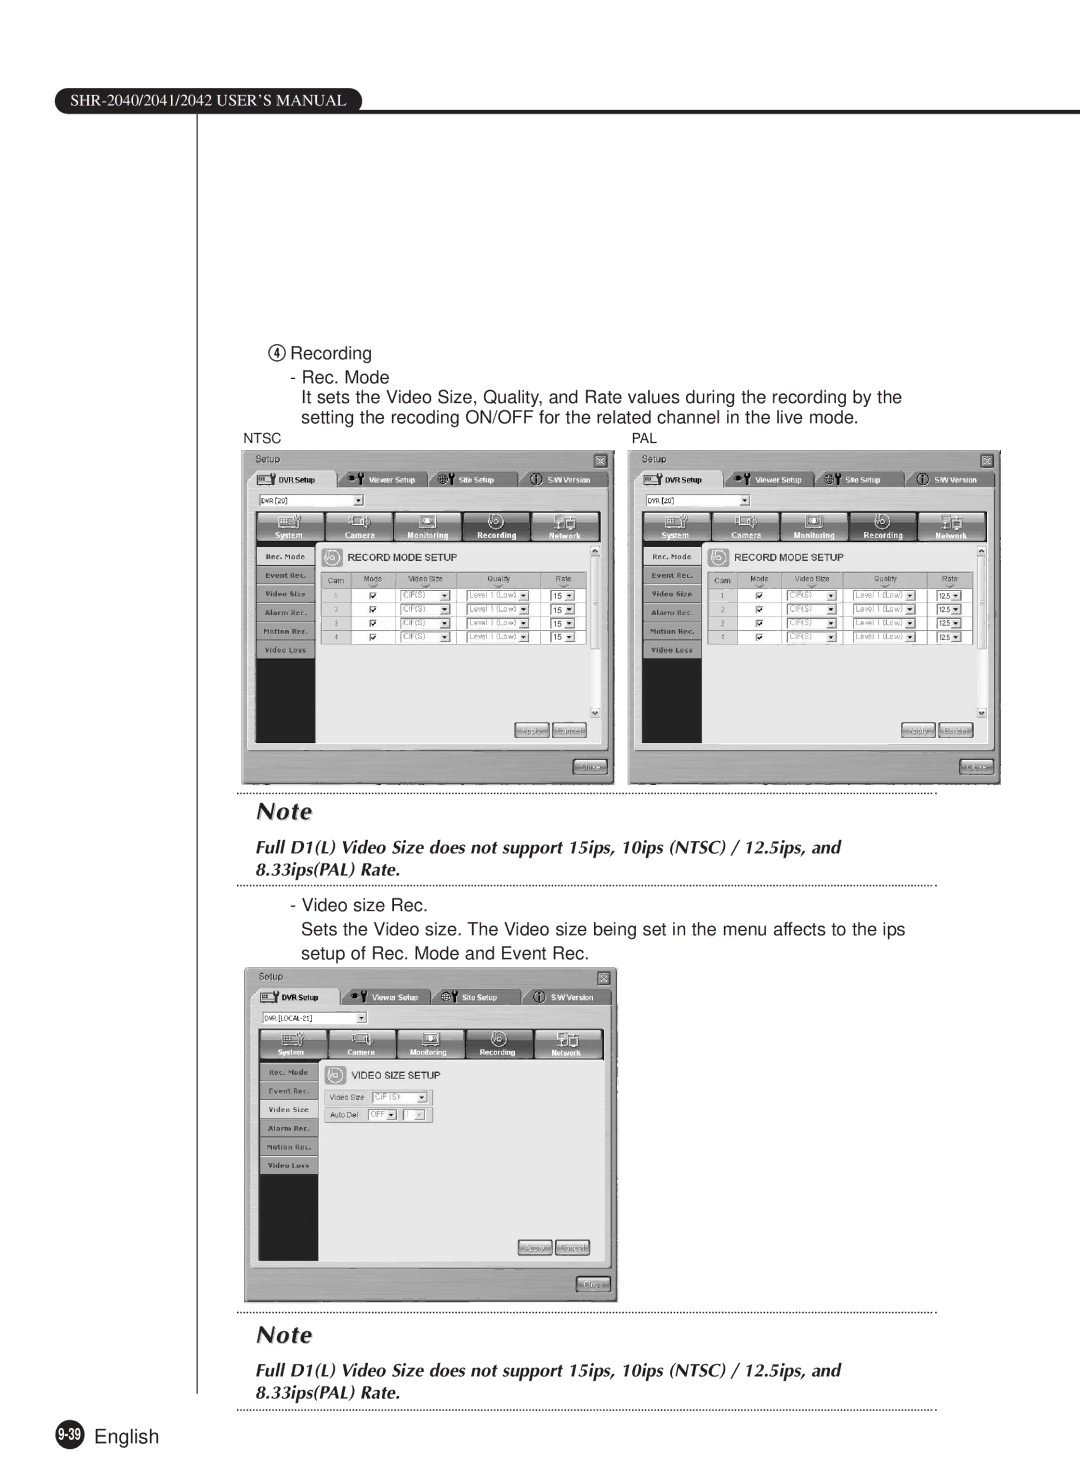 Samsung SHR-2040N, SHR-2040P manual 39English 